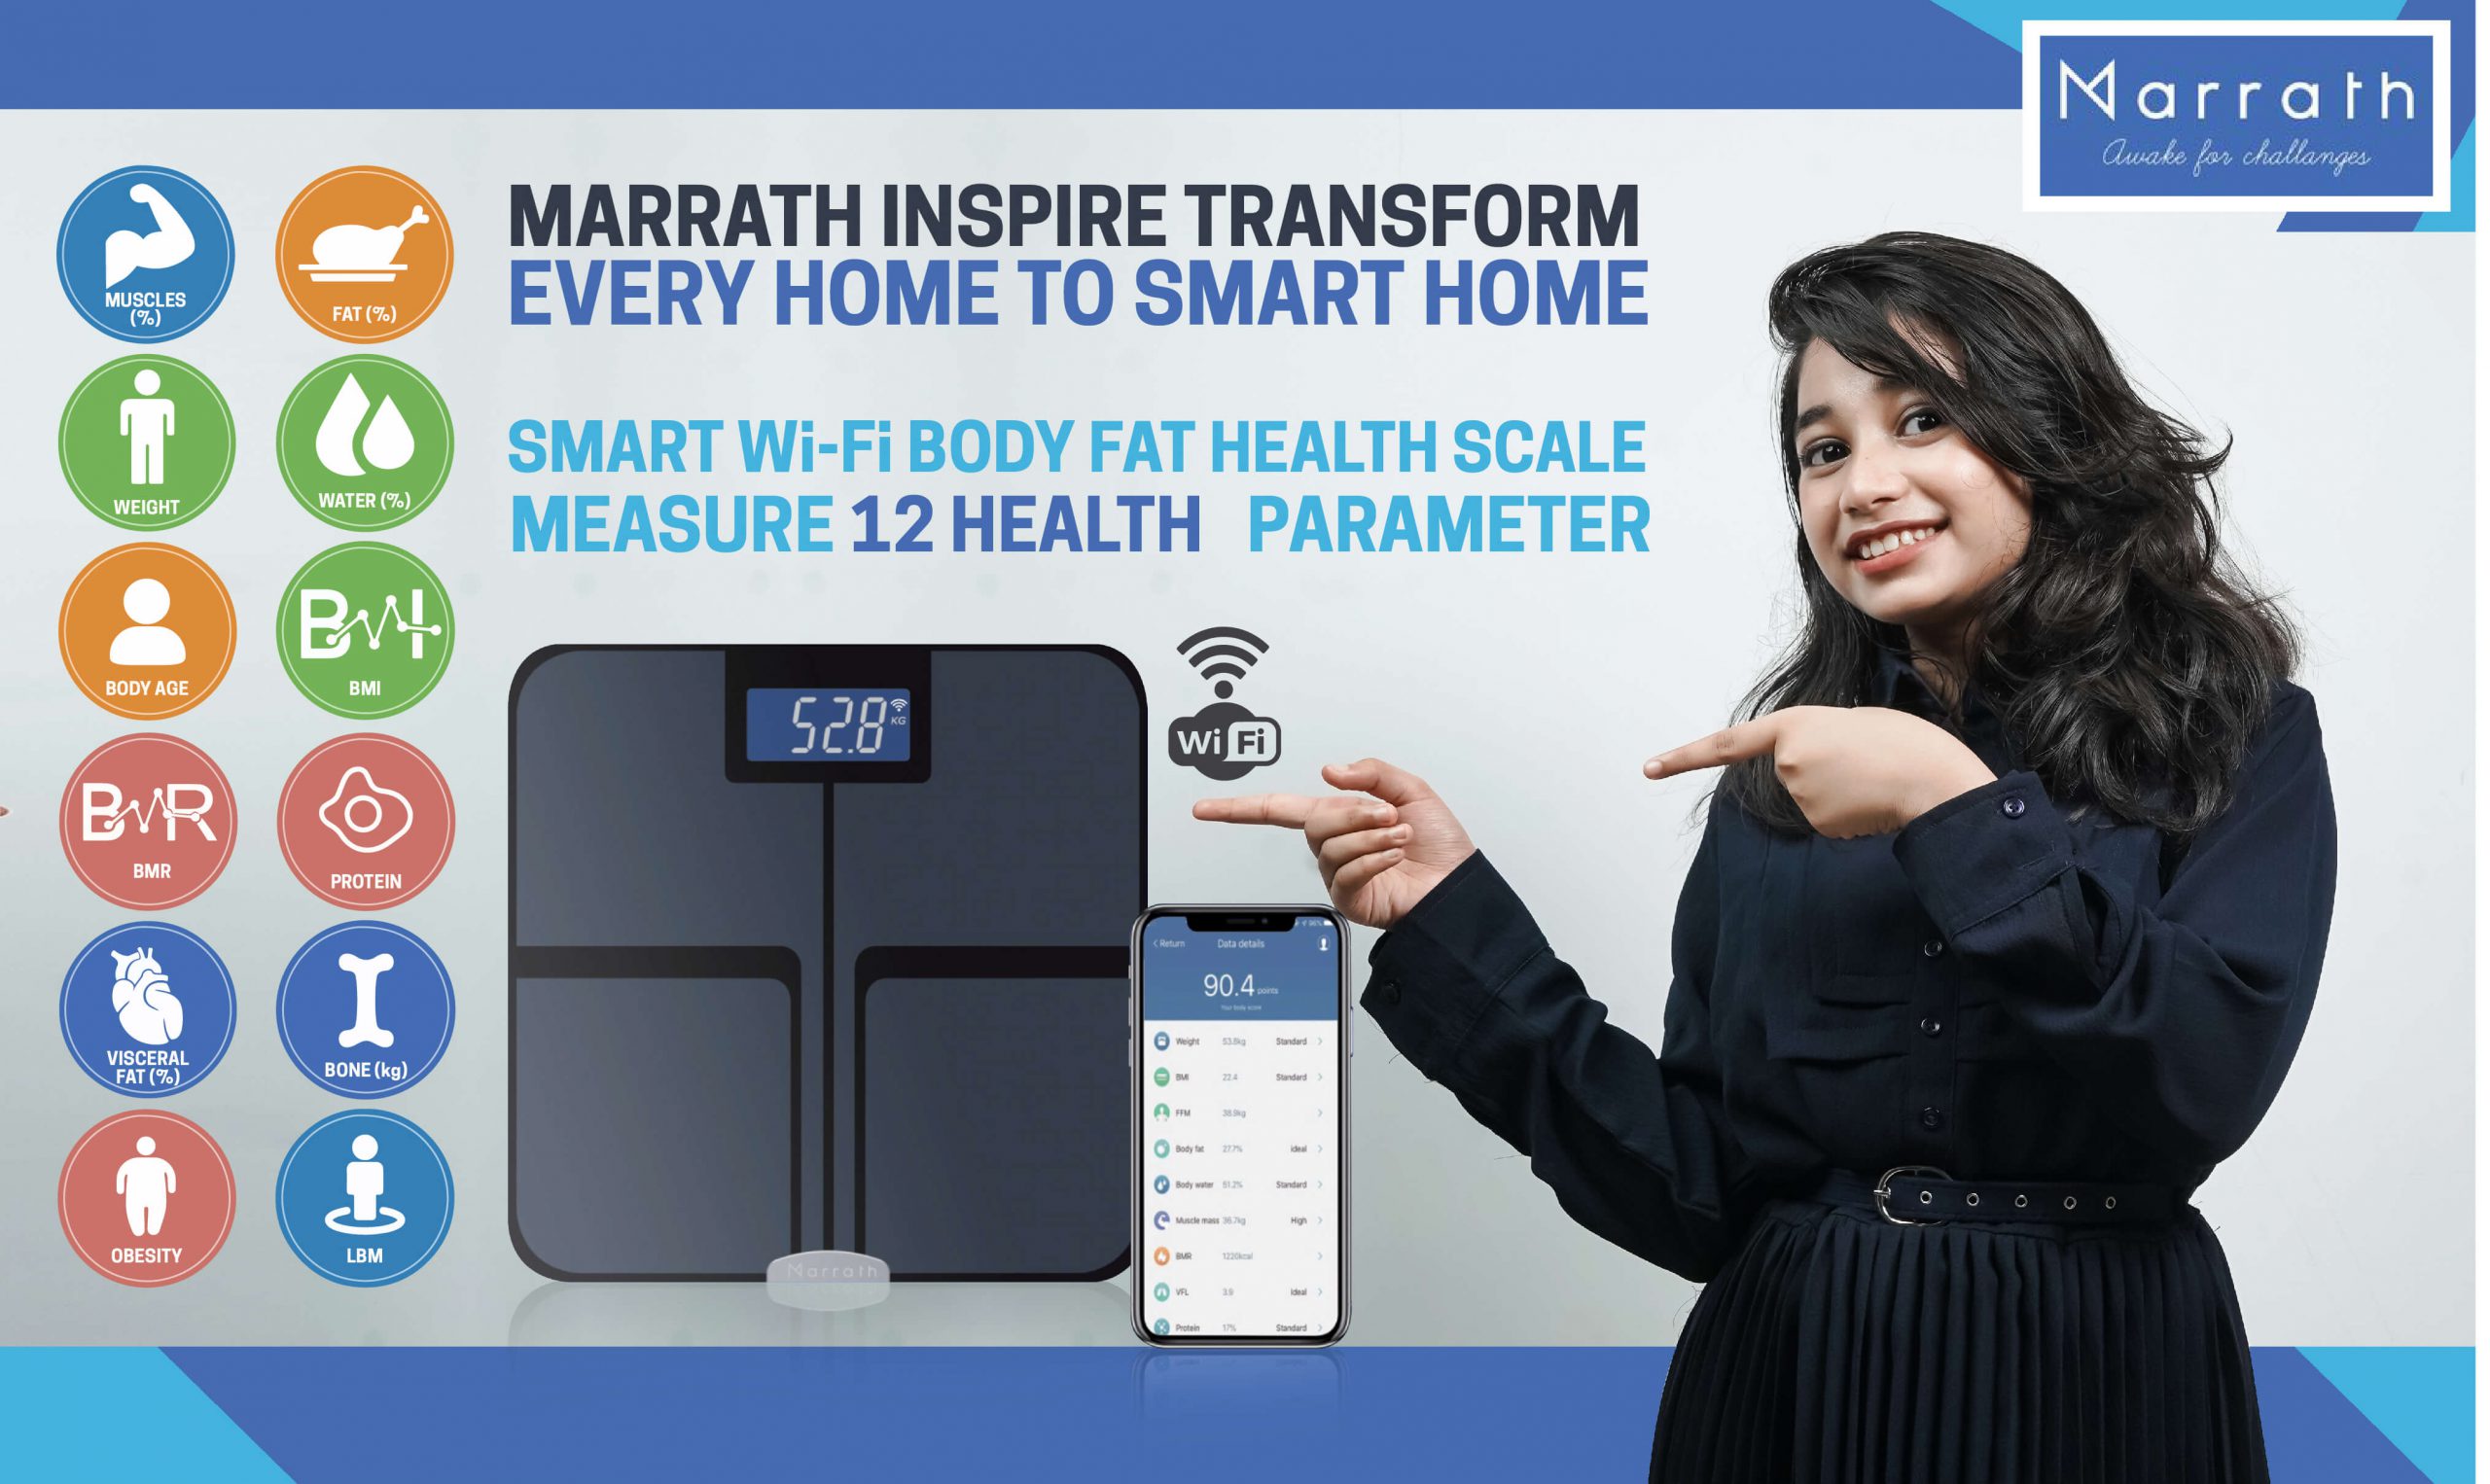 Marrath smart Wi-Fi body fat health scale                  